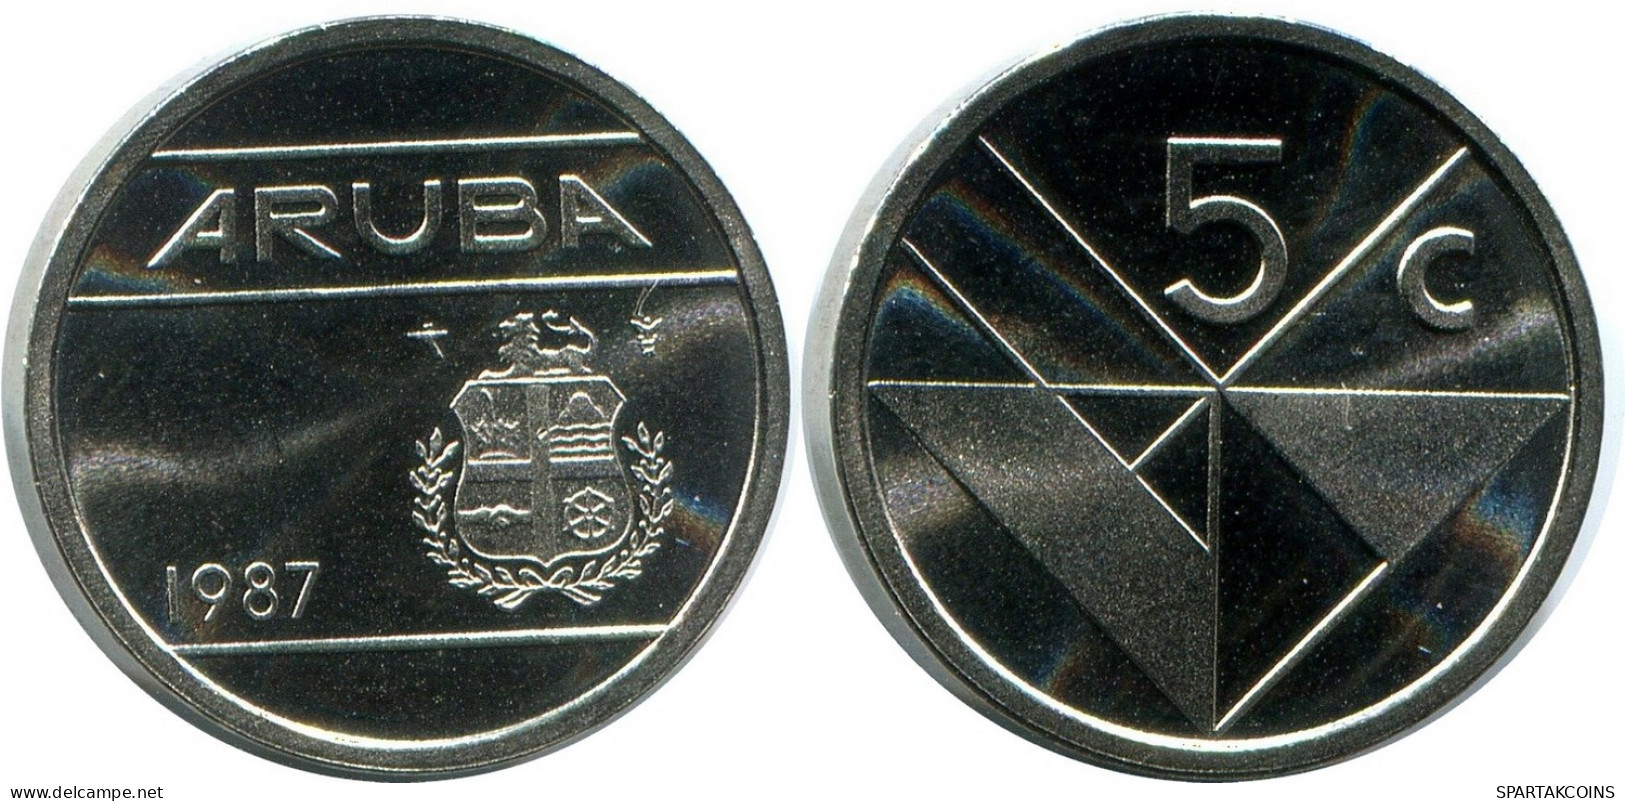 5 CENTS 1987 ARUBA Coin (From BU Mint Set) #AH110.U - Aruba